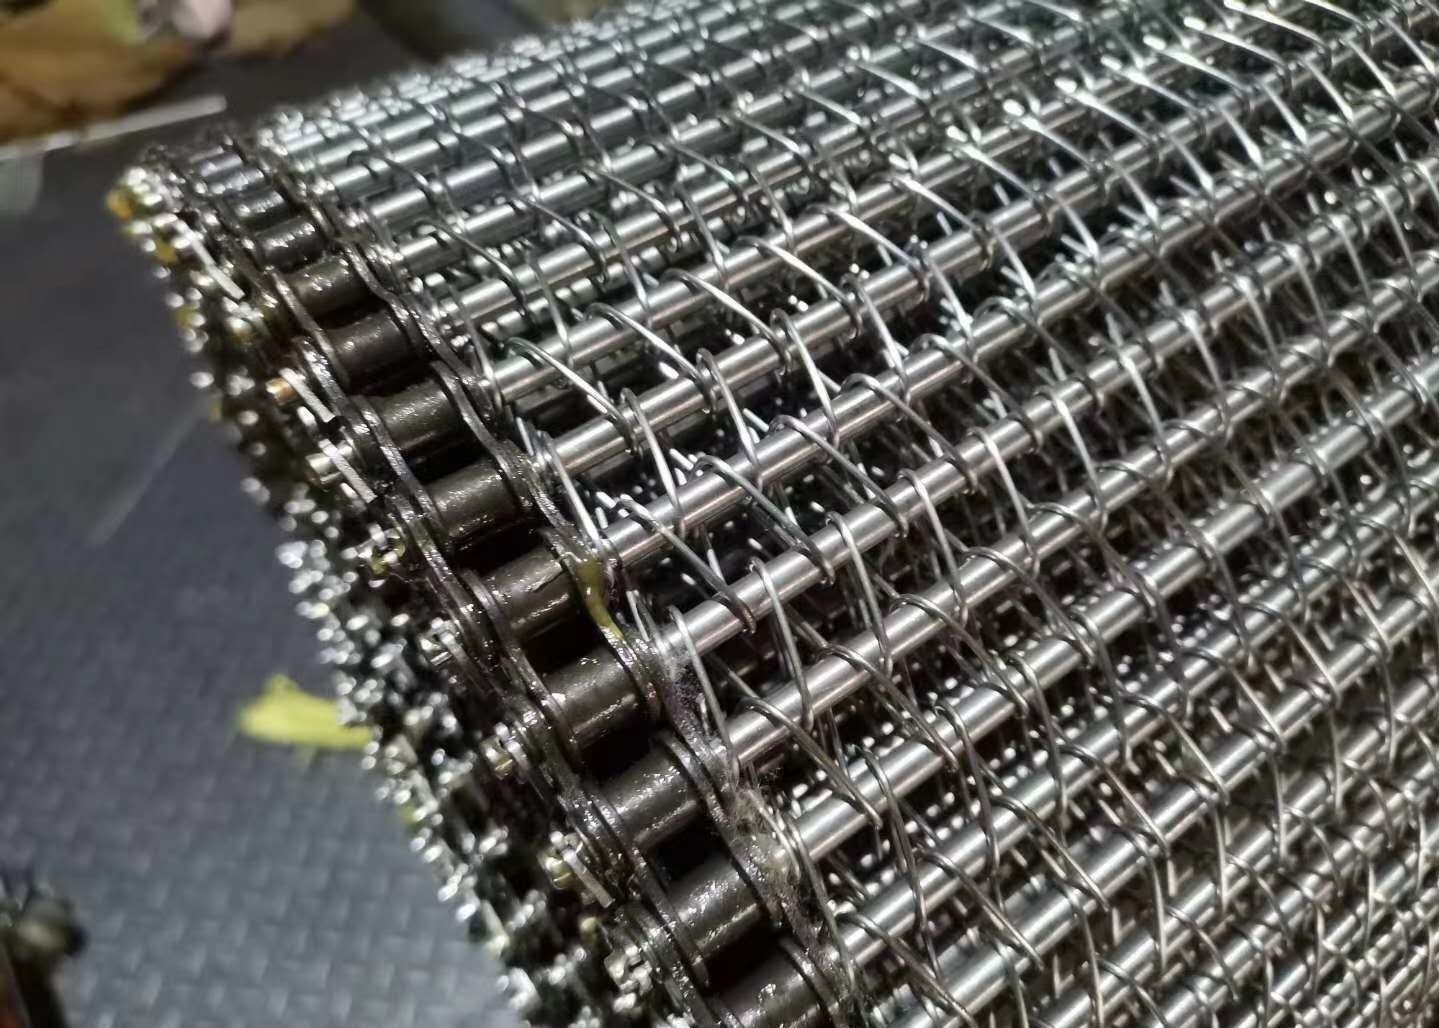 China 1mm 1/2inch Flat Wire Conveyor Belt Flex Stainless Steel Mesh Belt factory